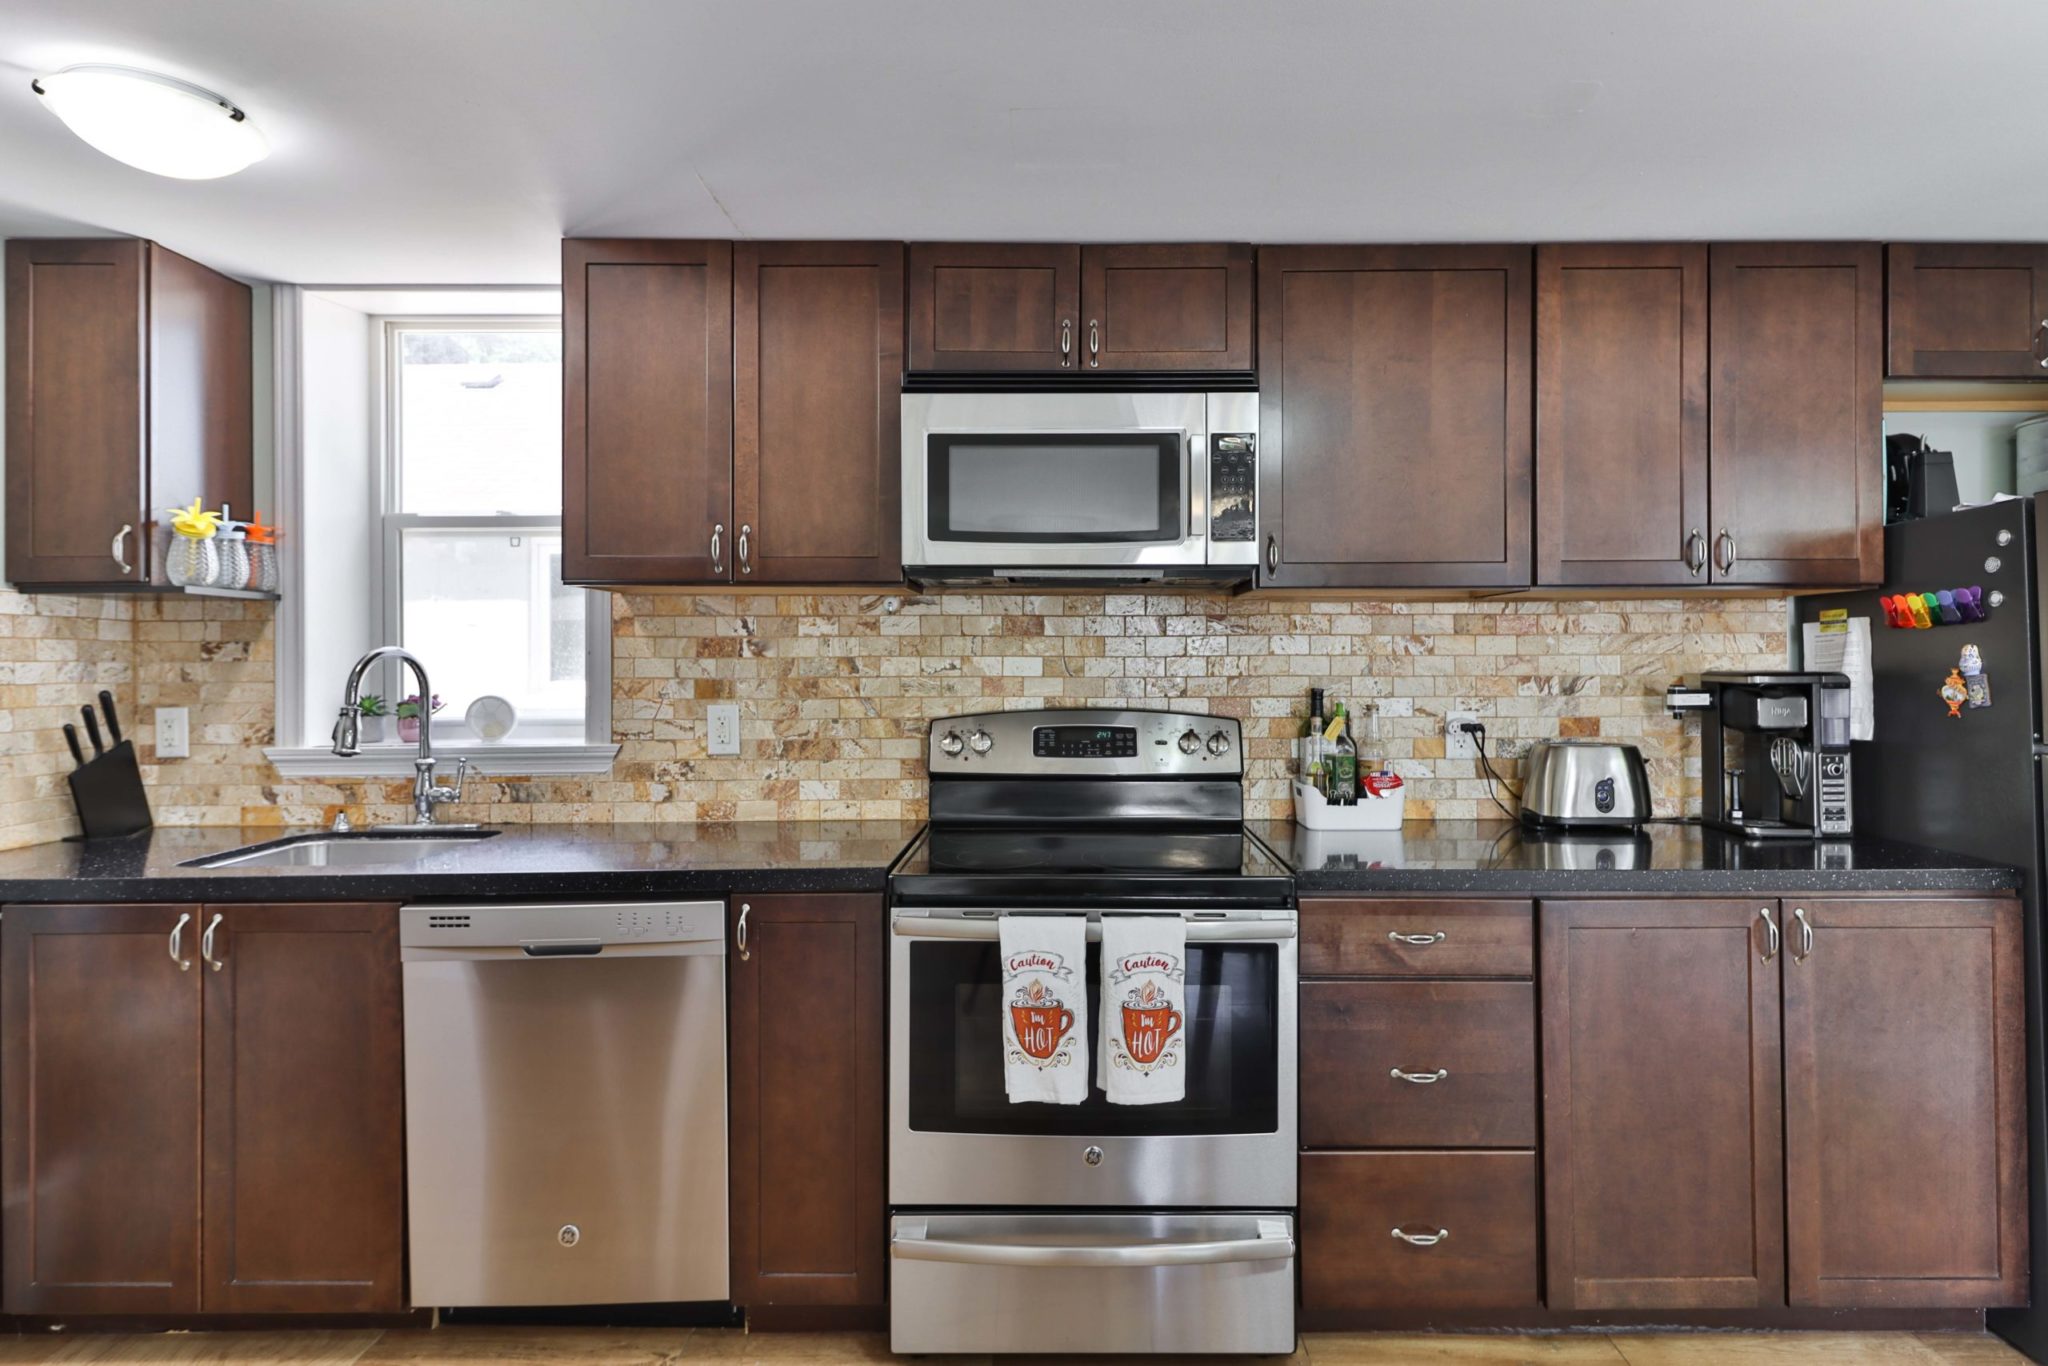 Kitchen with stainless-steel appliances, black granite counterd, dark cabinets and stylish brick back-splash.